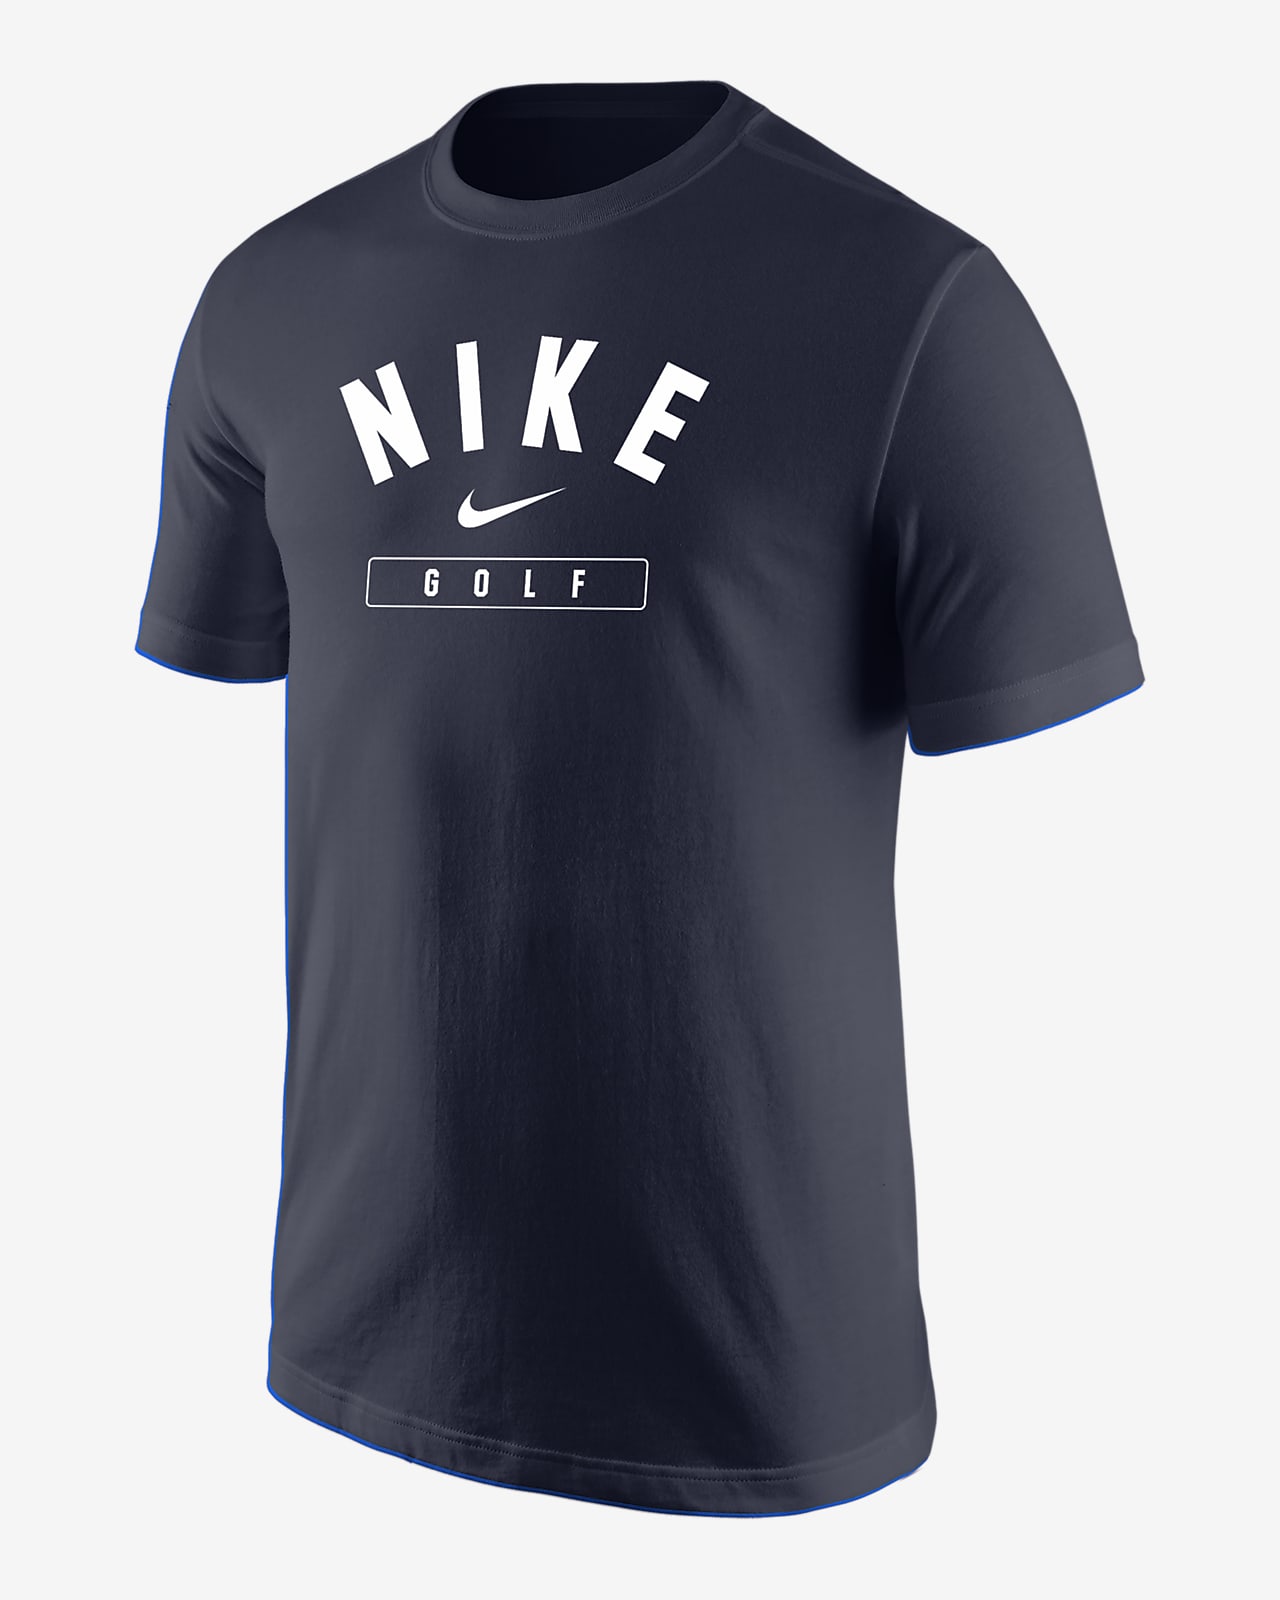 Nike Golf Men's T-Shirt